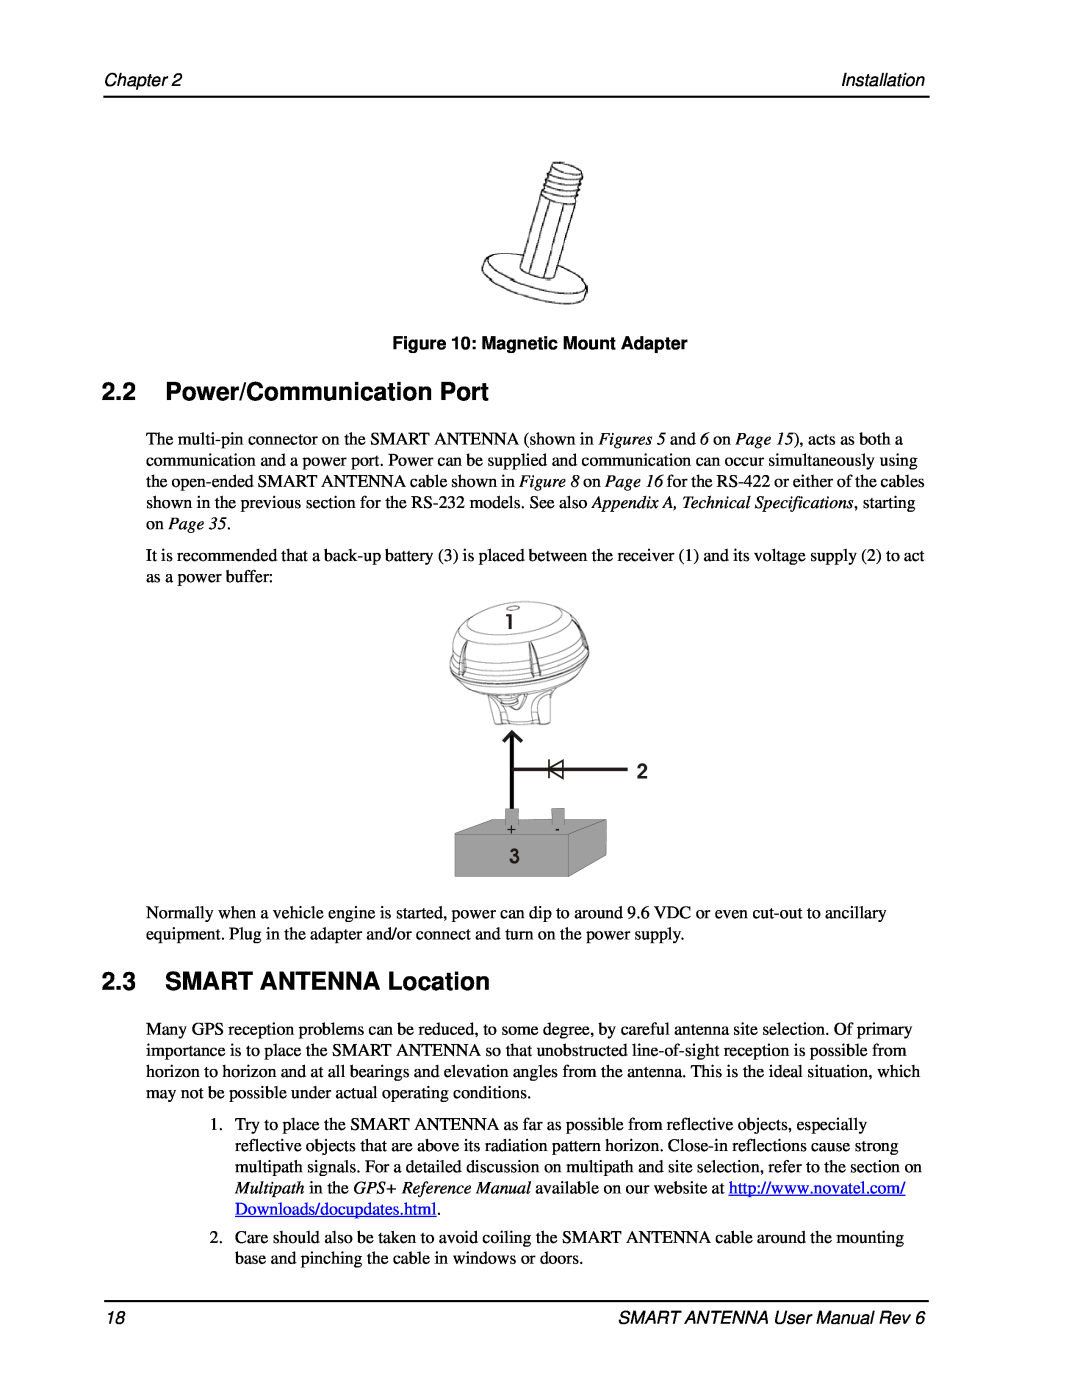 Novatel 2.2Power/Communication Port, 2.3SMART ANTENNA Location, Chapter, Installation, Magnetic Mount Adapter 